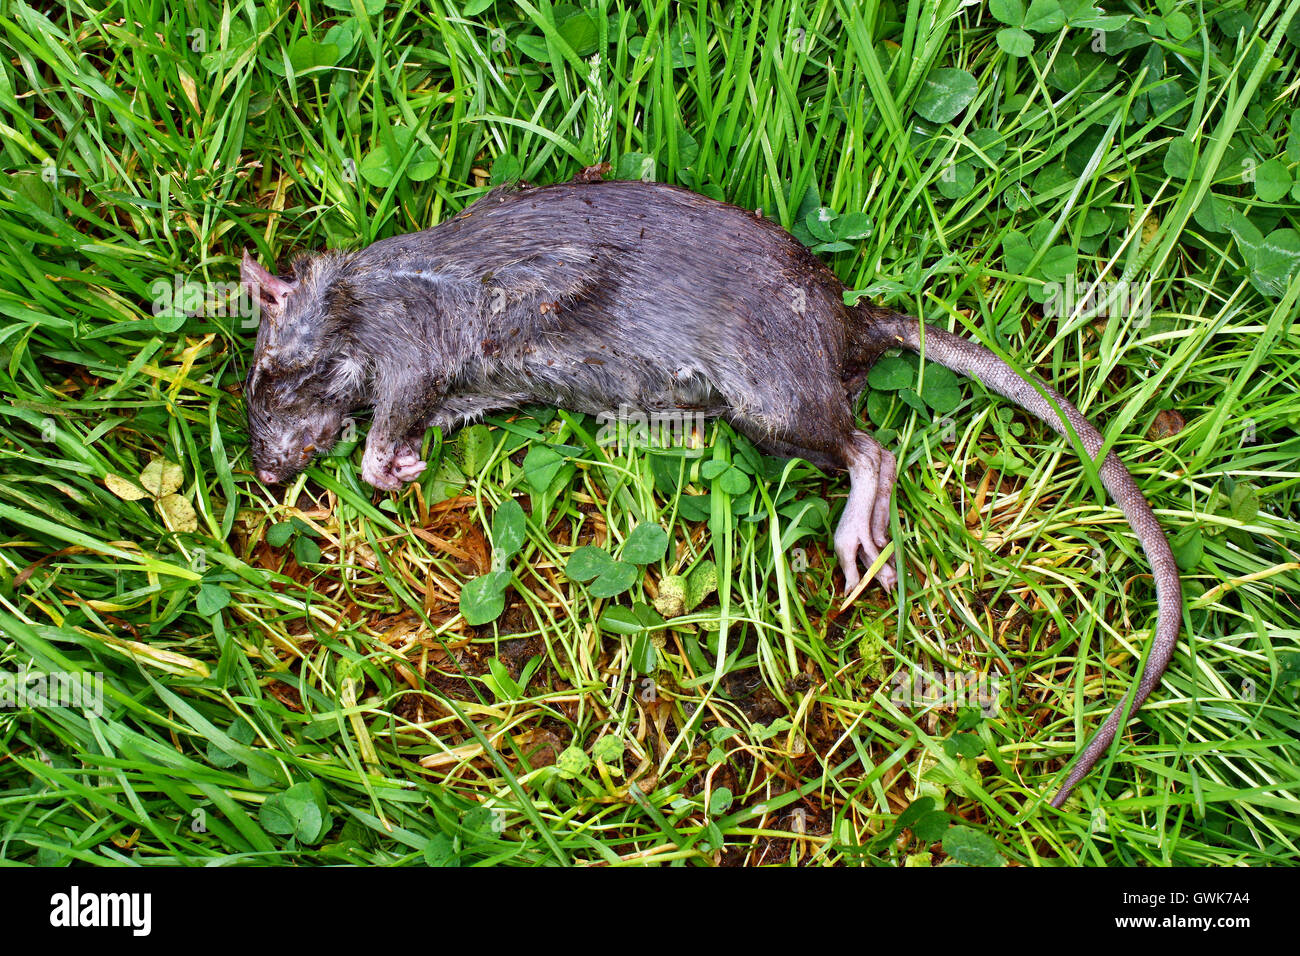 Veneno para roedores fotografías e imágenes de alta resolución - Alamy